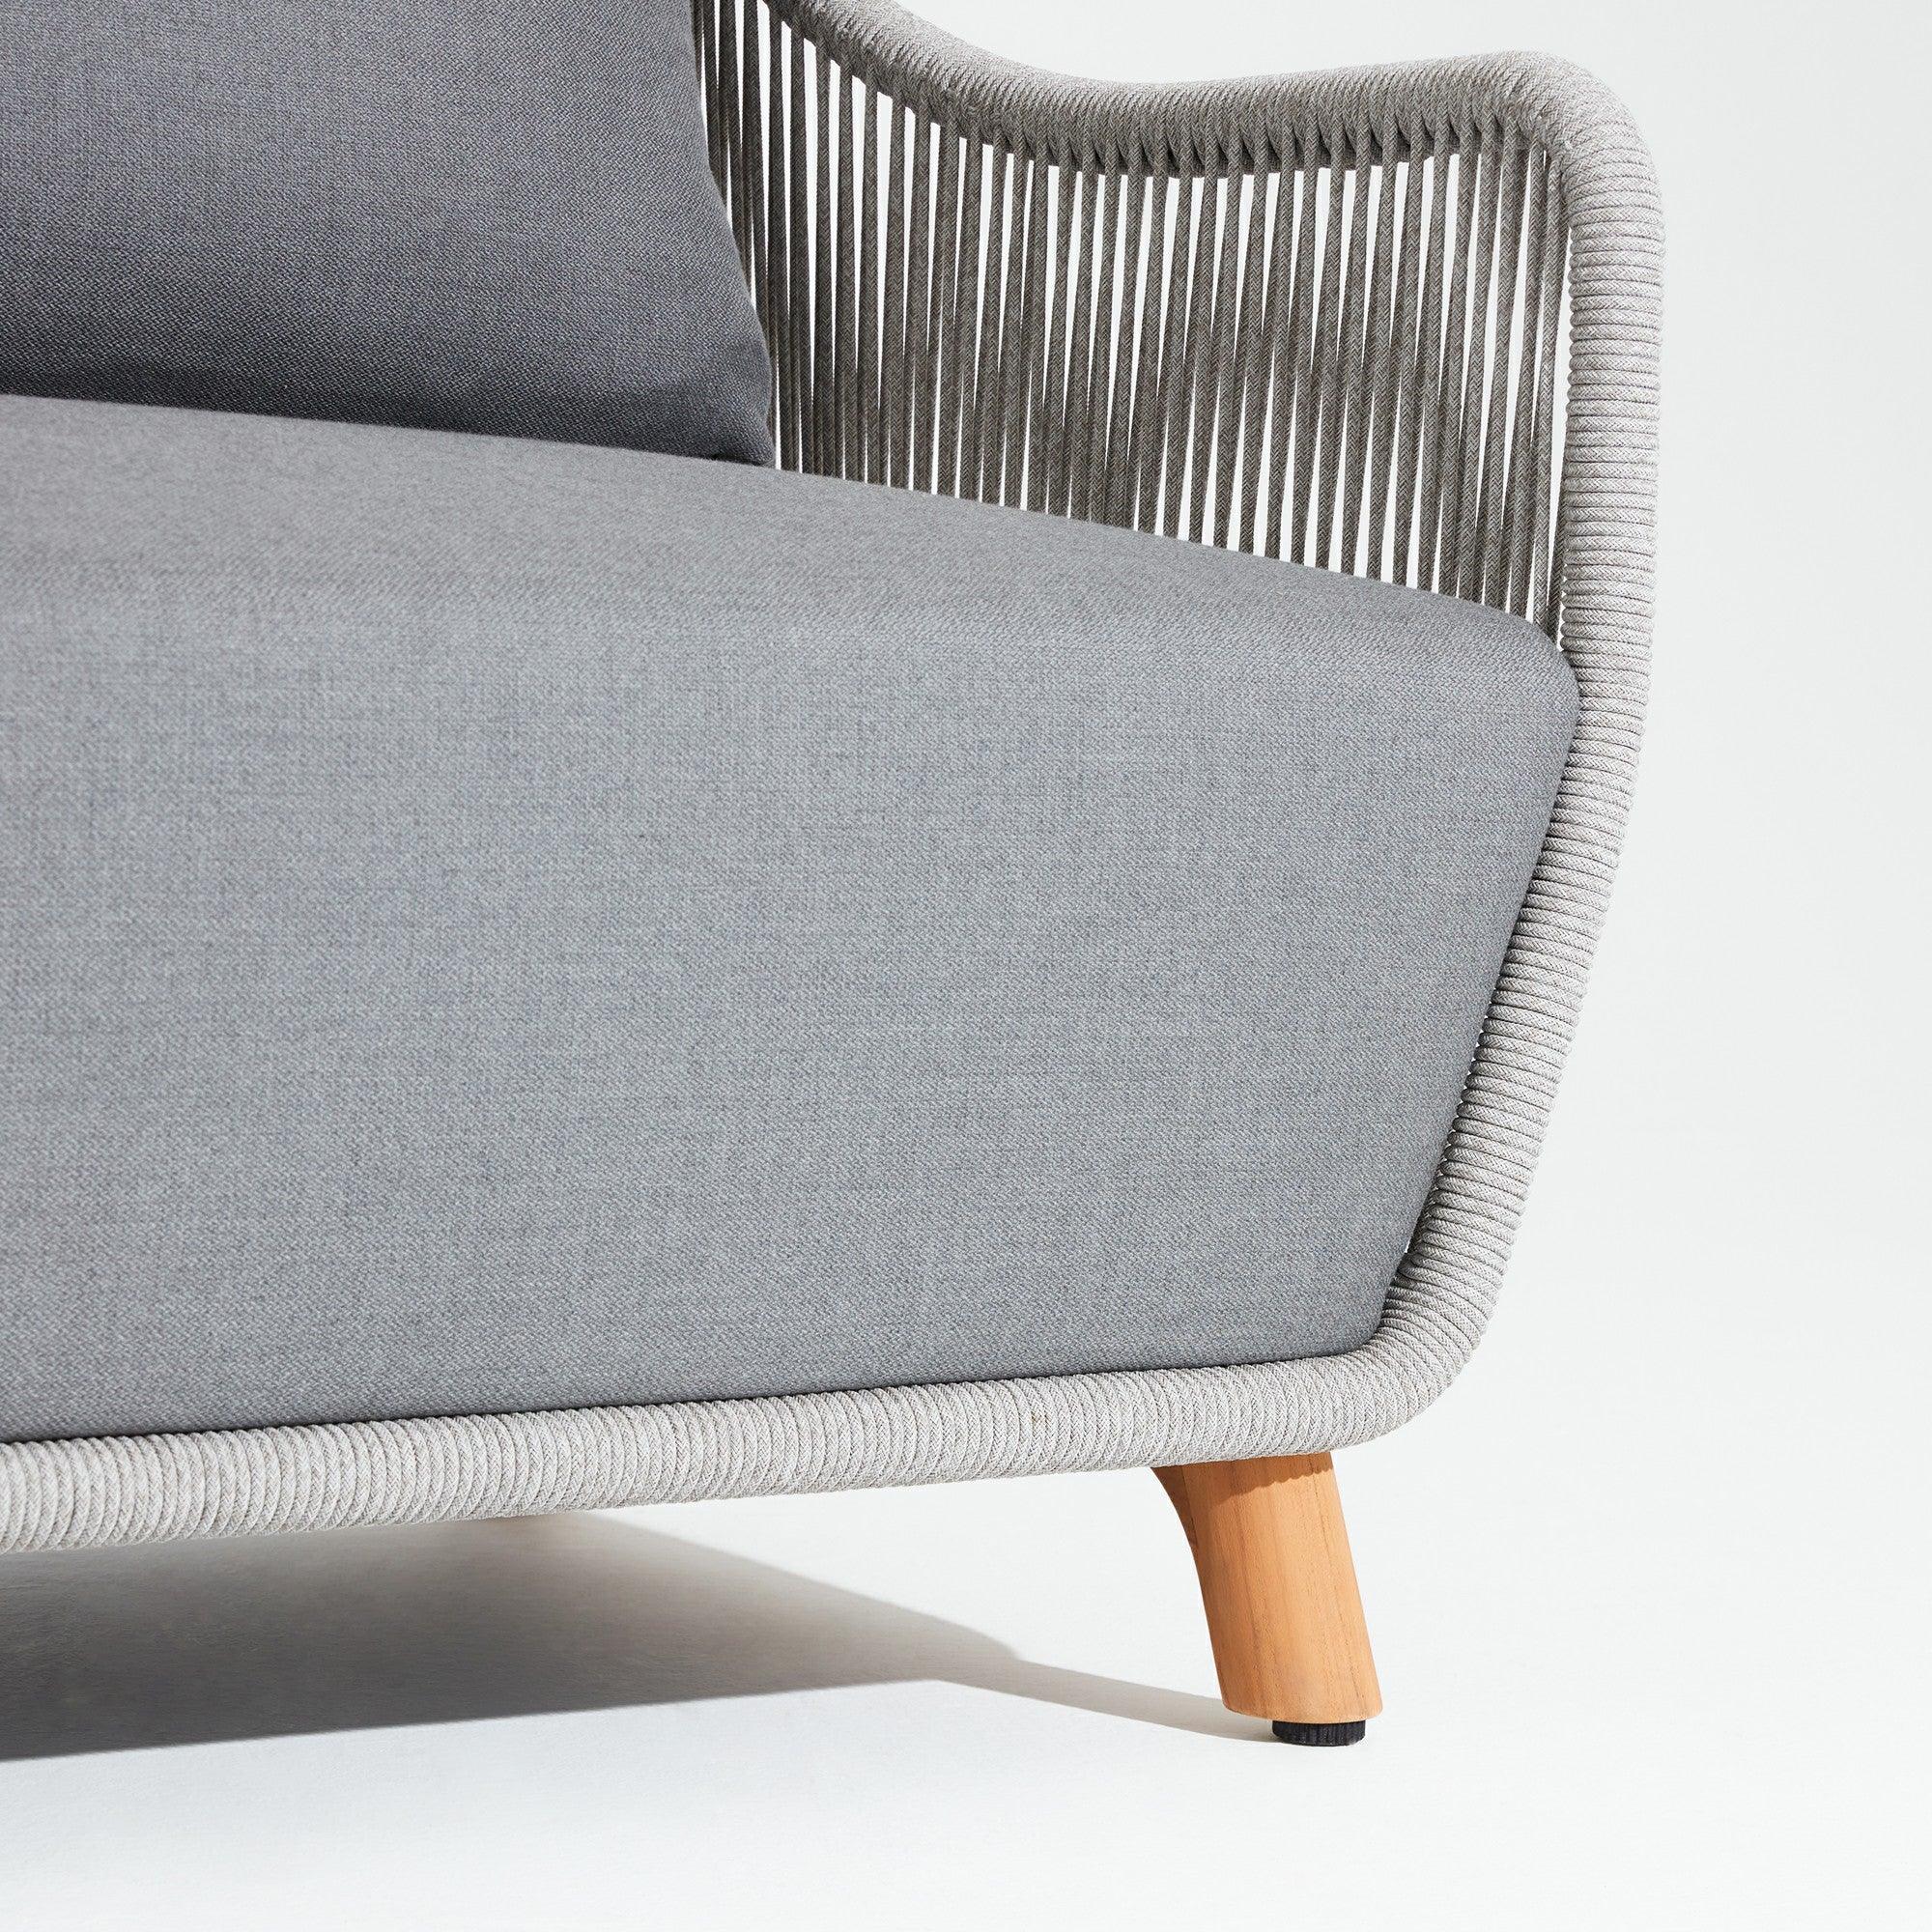 Natural - Lounge chair,rope accent, 10''grey cushion, teak leg,smooth armrest, detailed view-Sunsitt Signature